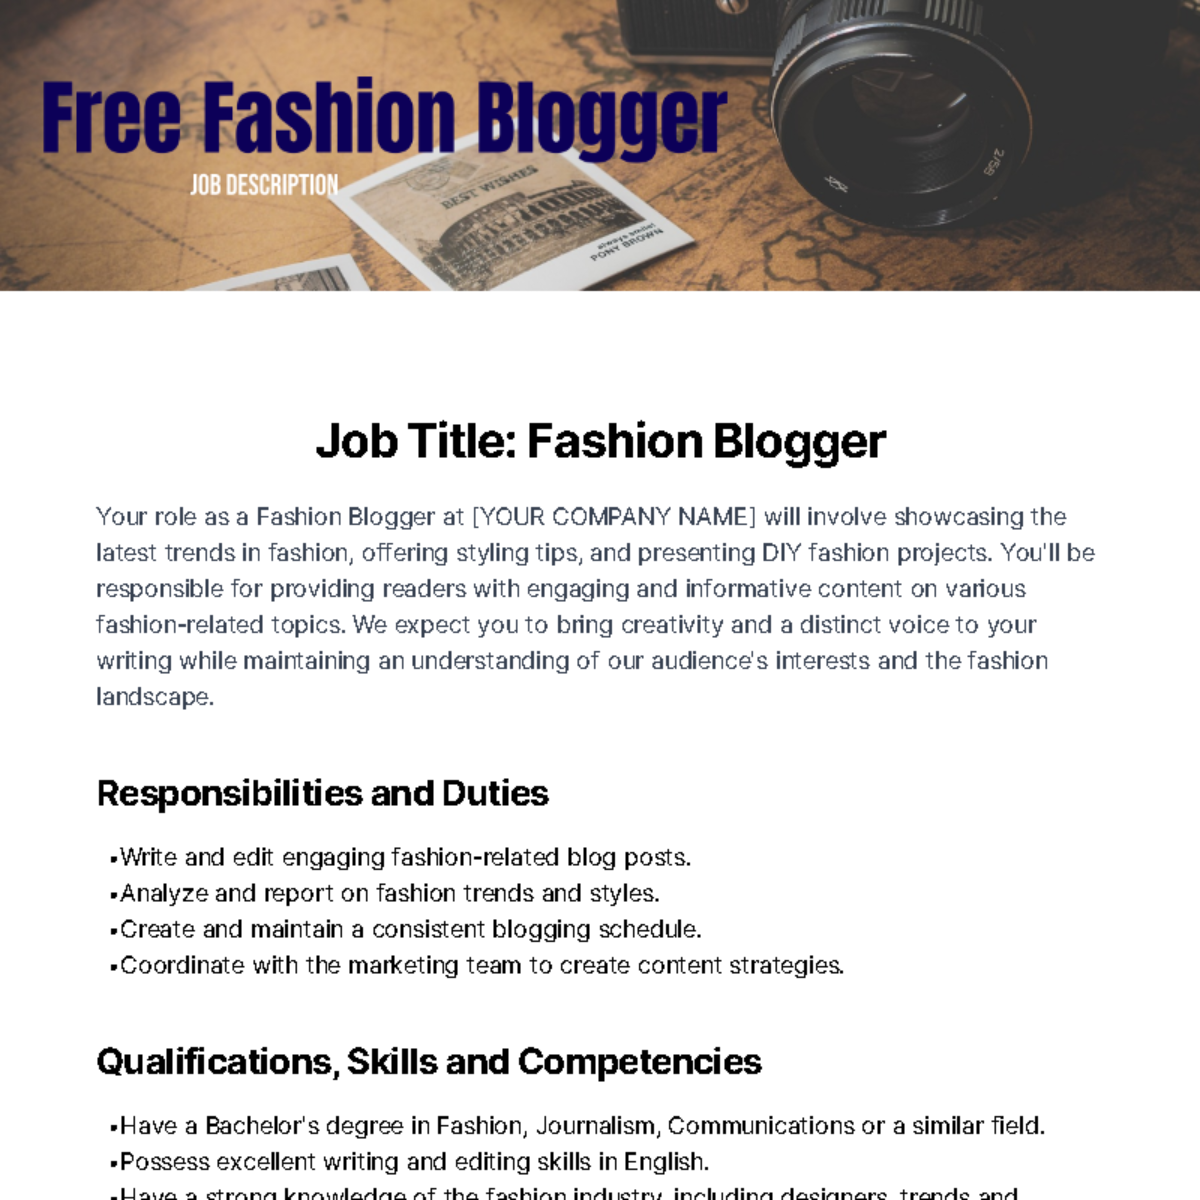 Free Fashion Blogger Job Description Template